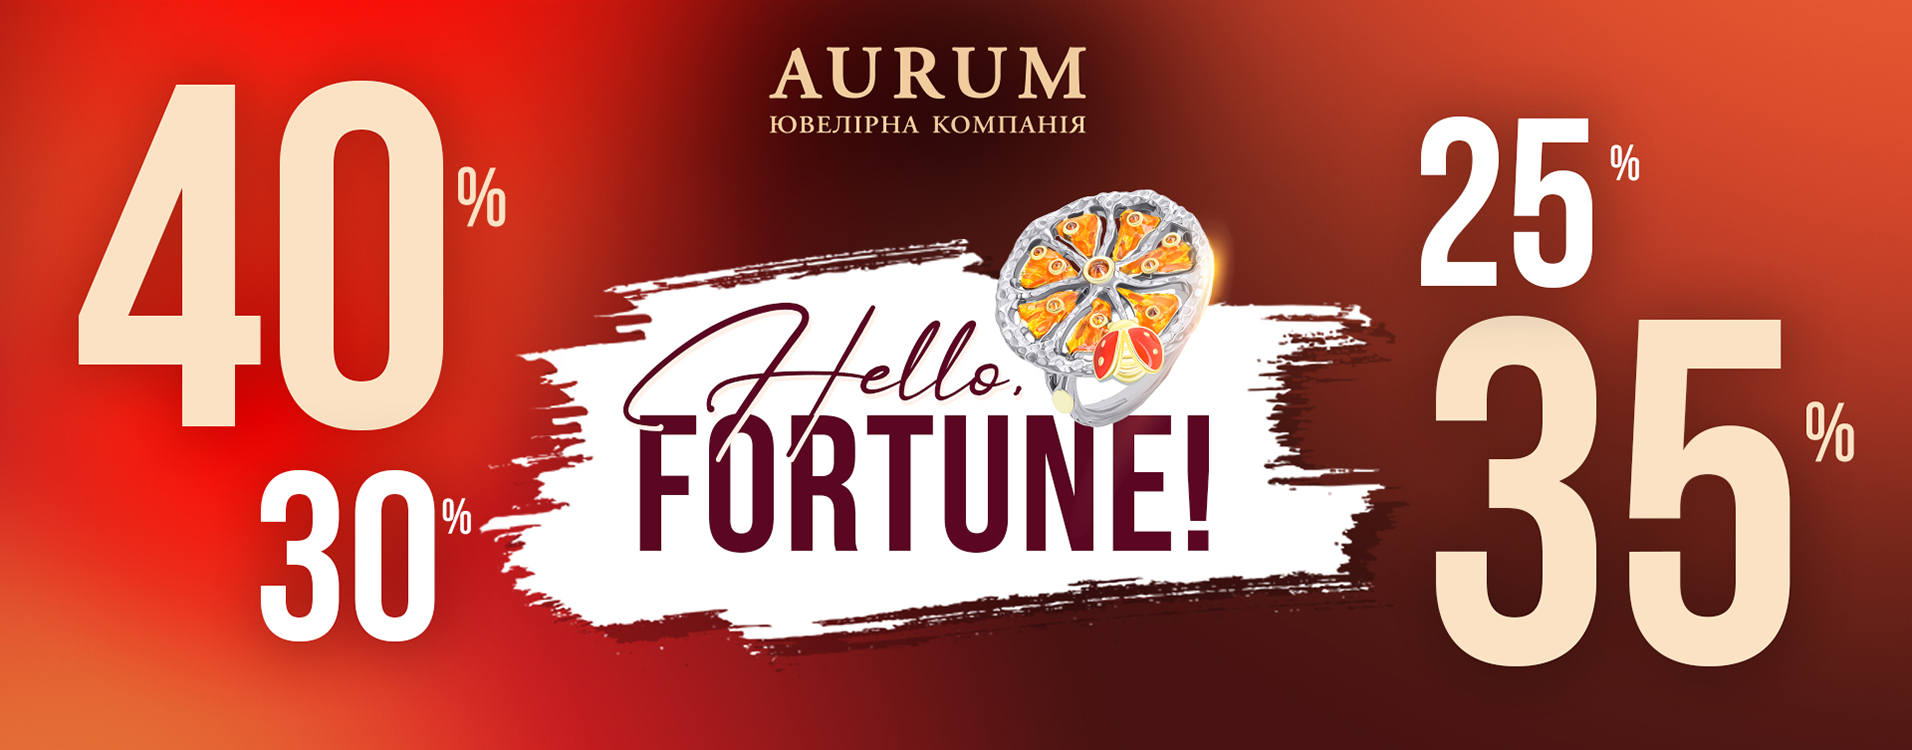 Greet Fortune from AURUM